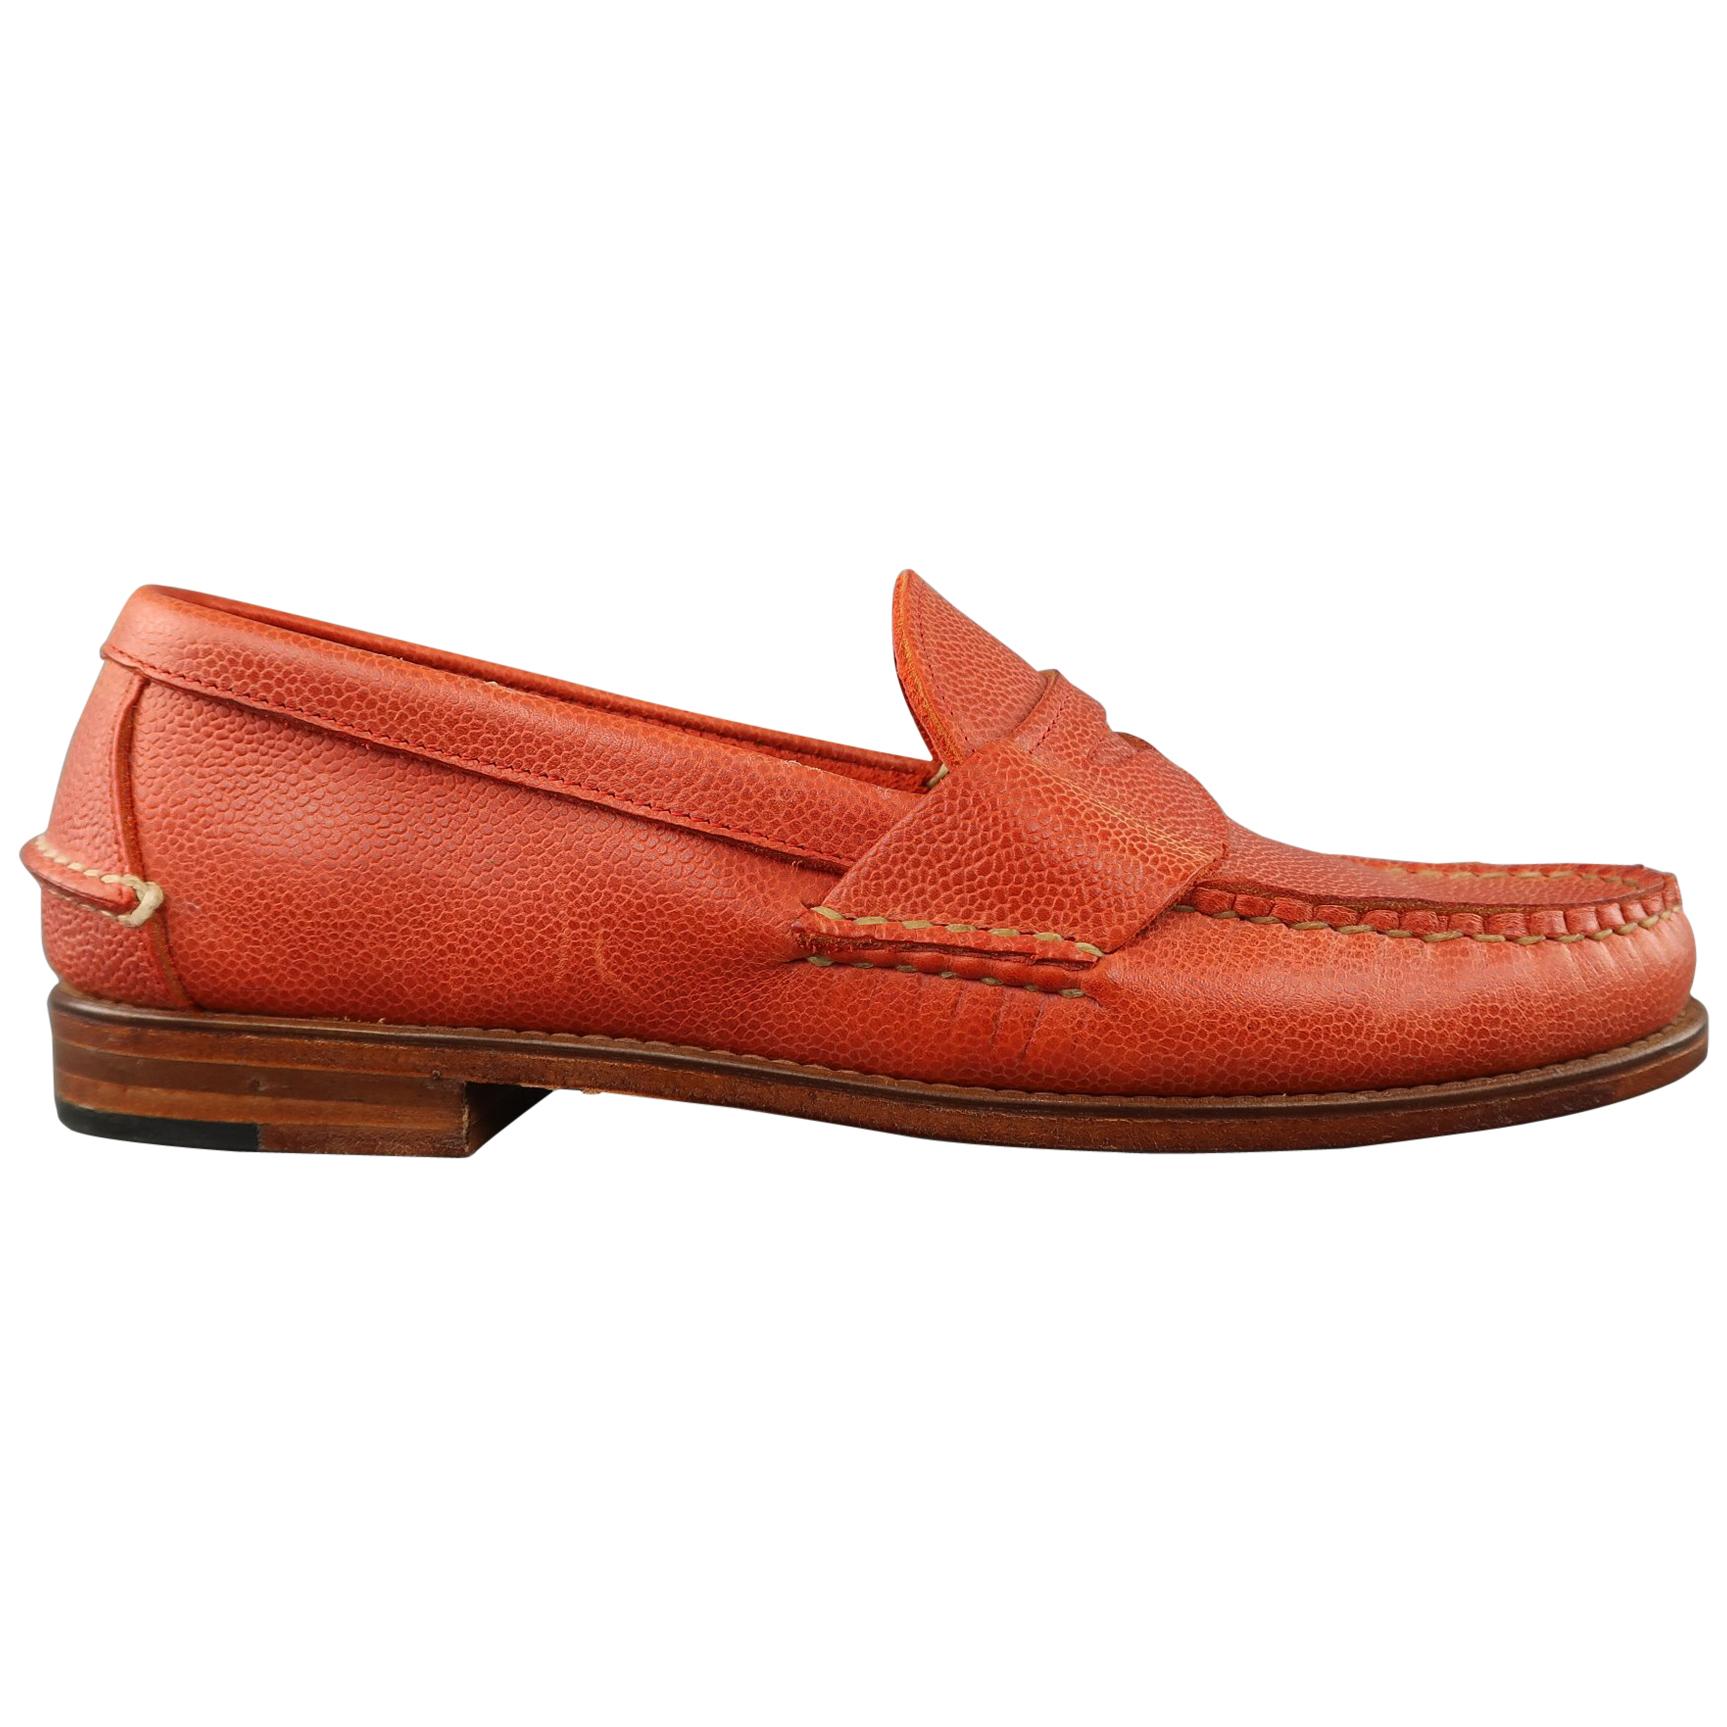 RALPH LAUREN Size 9 Orange Pebbled Leather Slip On Penny Loafers